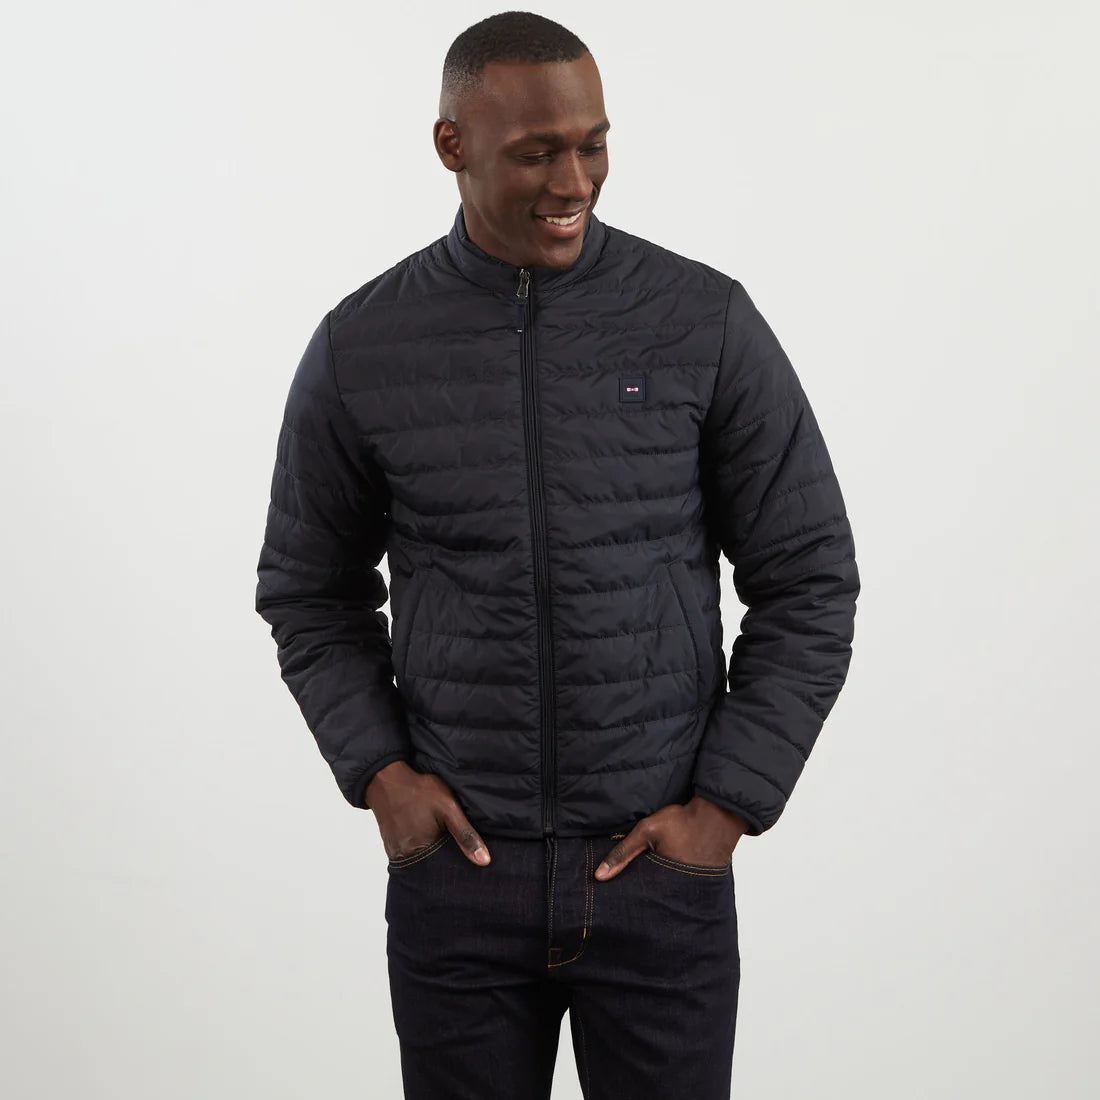 Eden Park Jackets & Coats, Lightweight, long-sleeved puffa jacket in dark blue